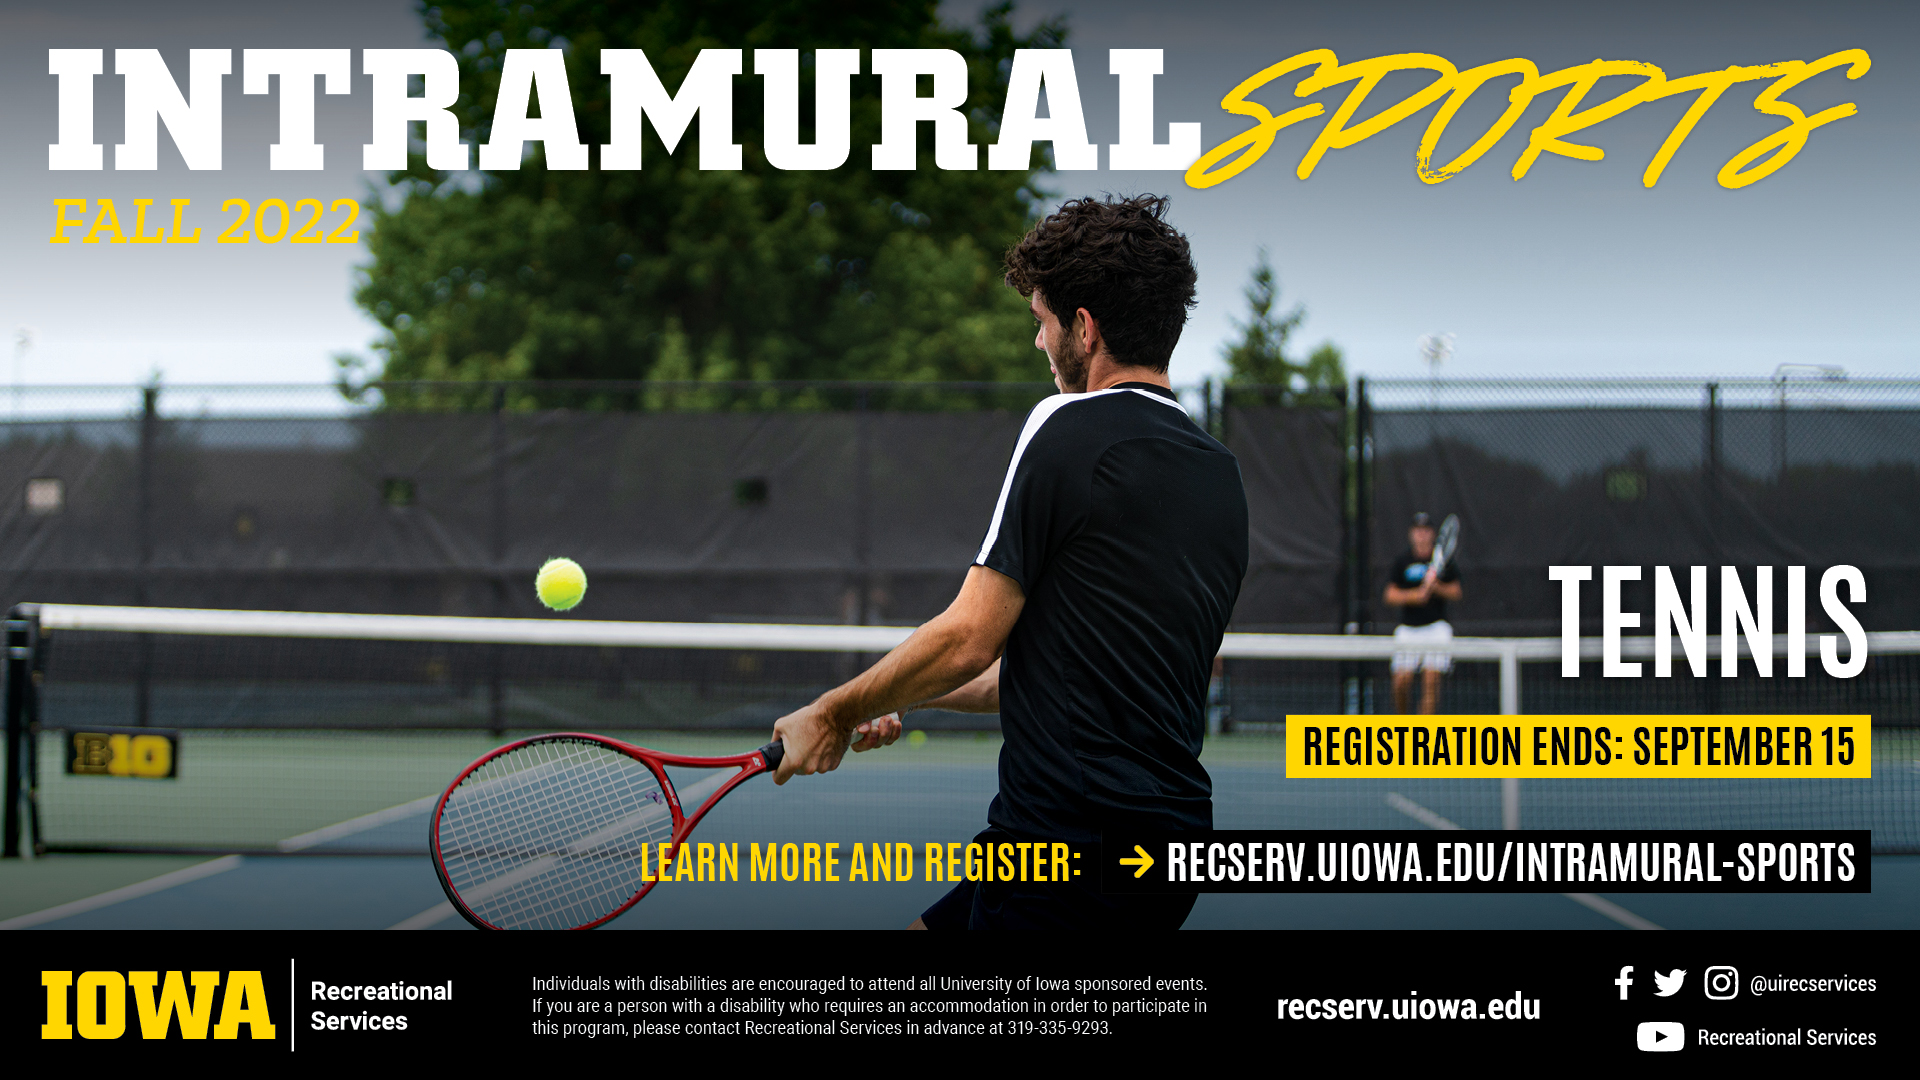 Intramural Sports Fall 2022: Tennis. Learn more and register at reserv.uiowa.edu/intramural-sports